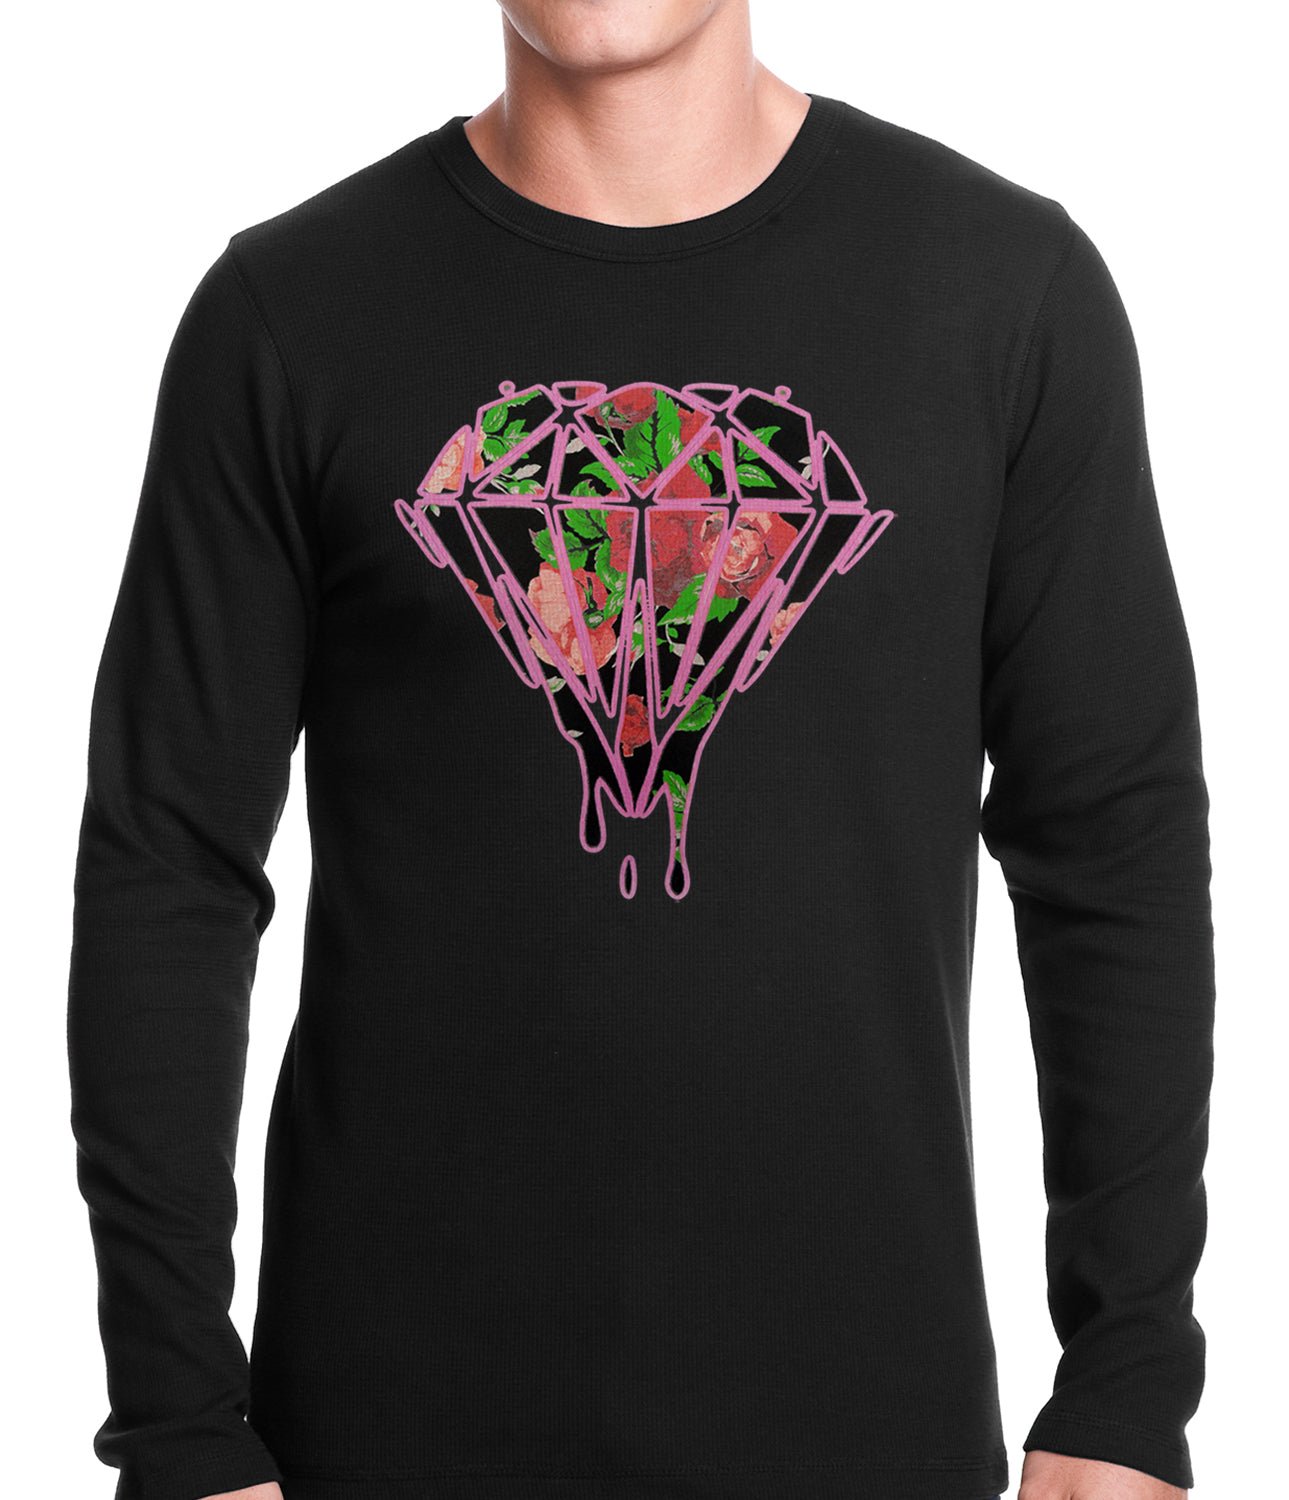 Roses Dripping Diamond Thermal Shirt